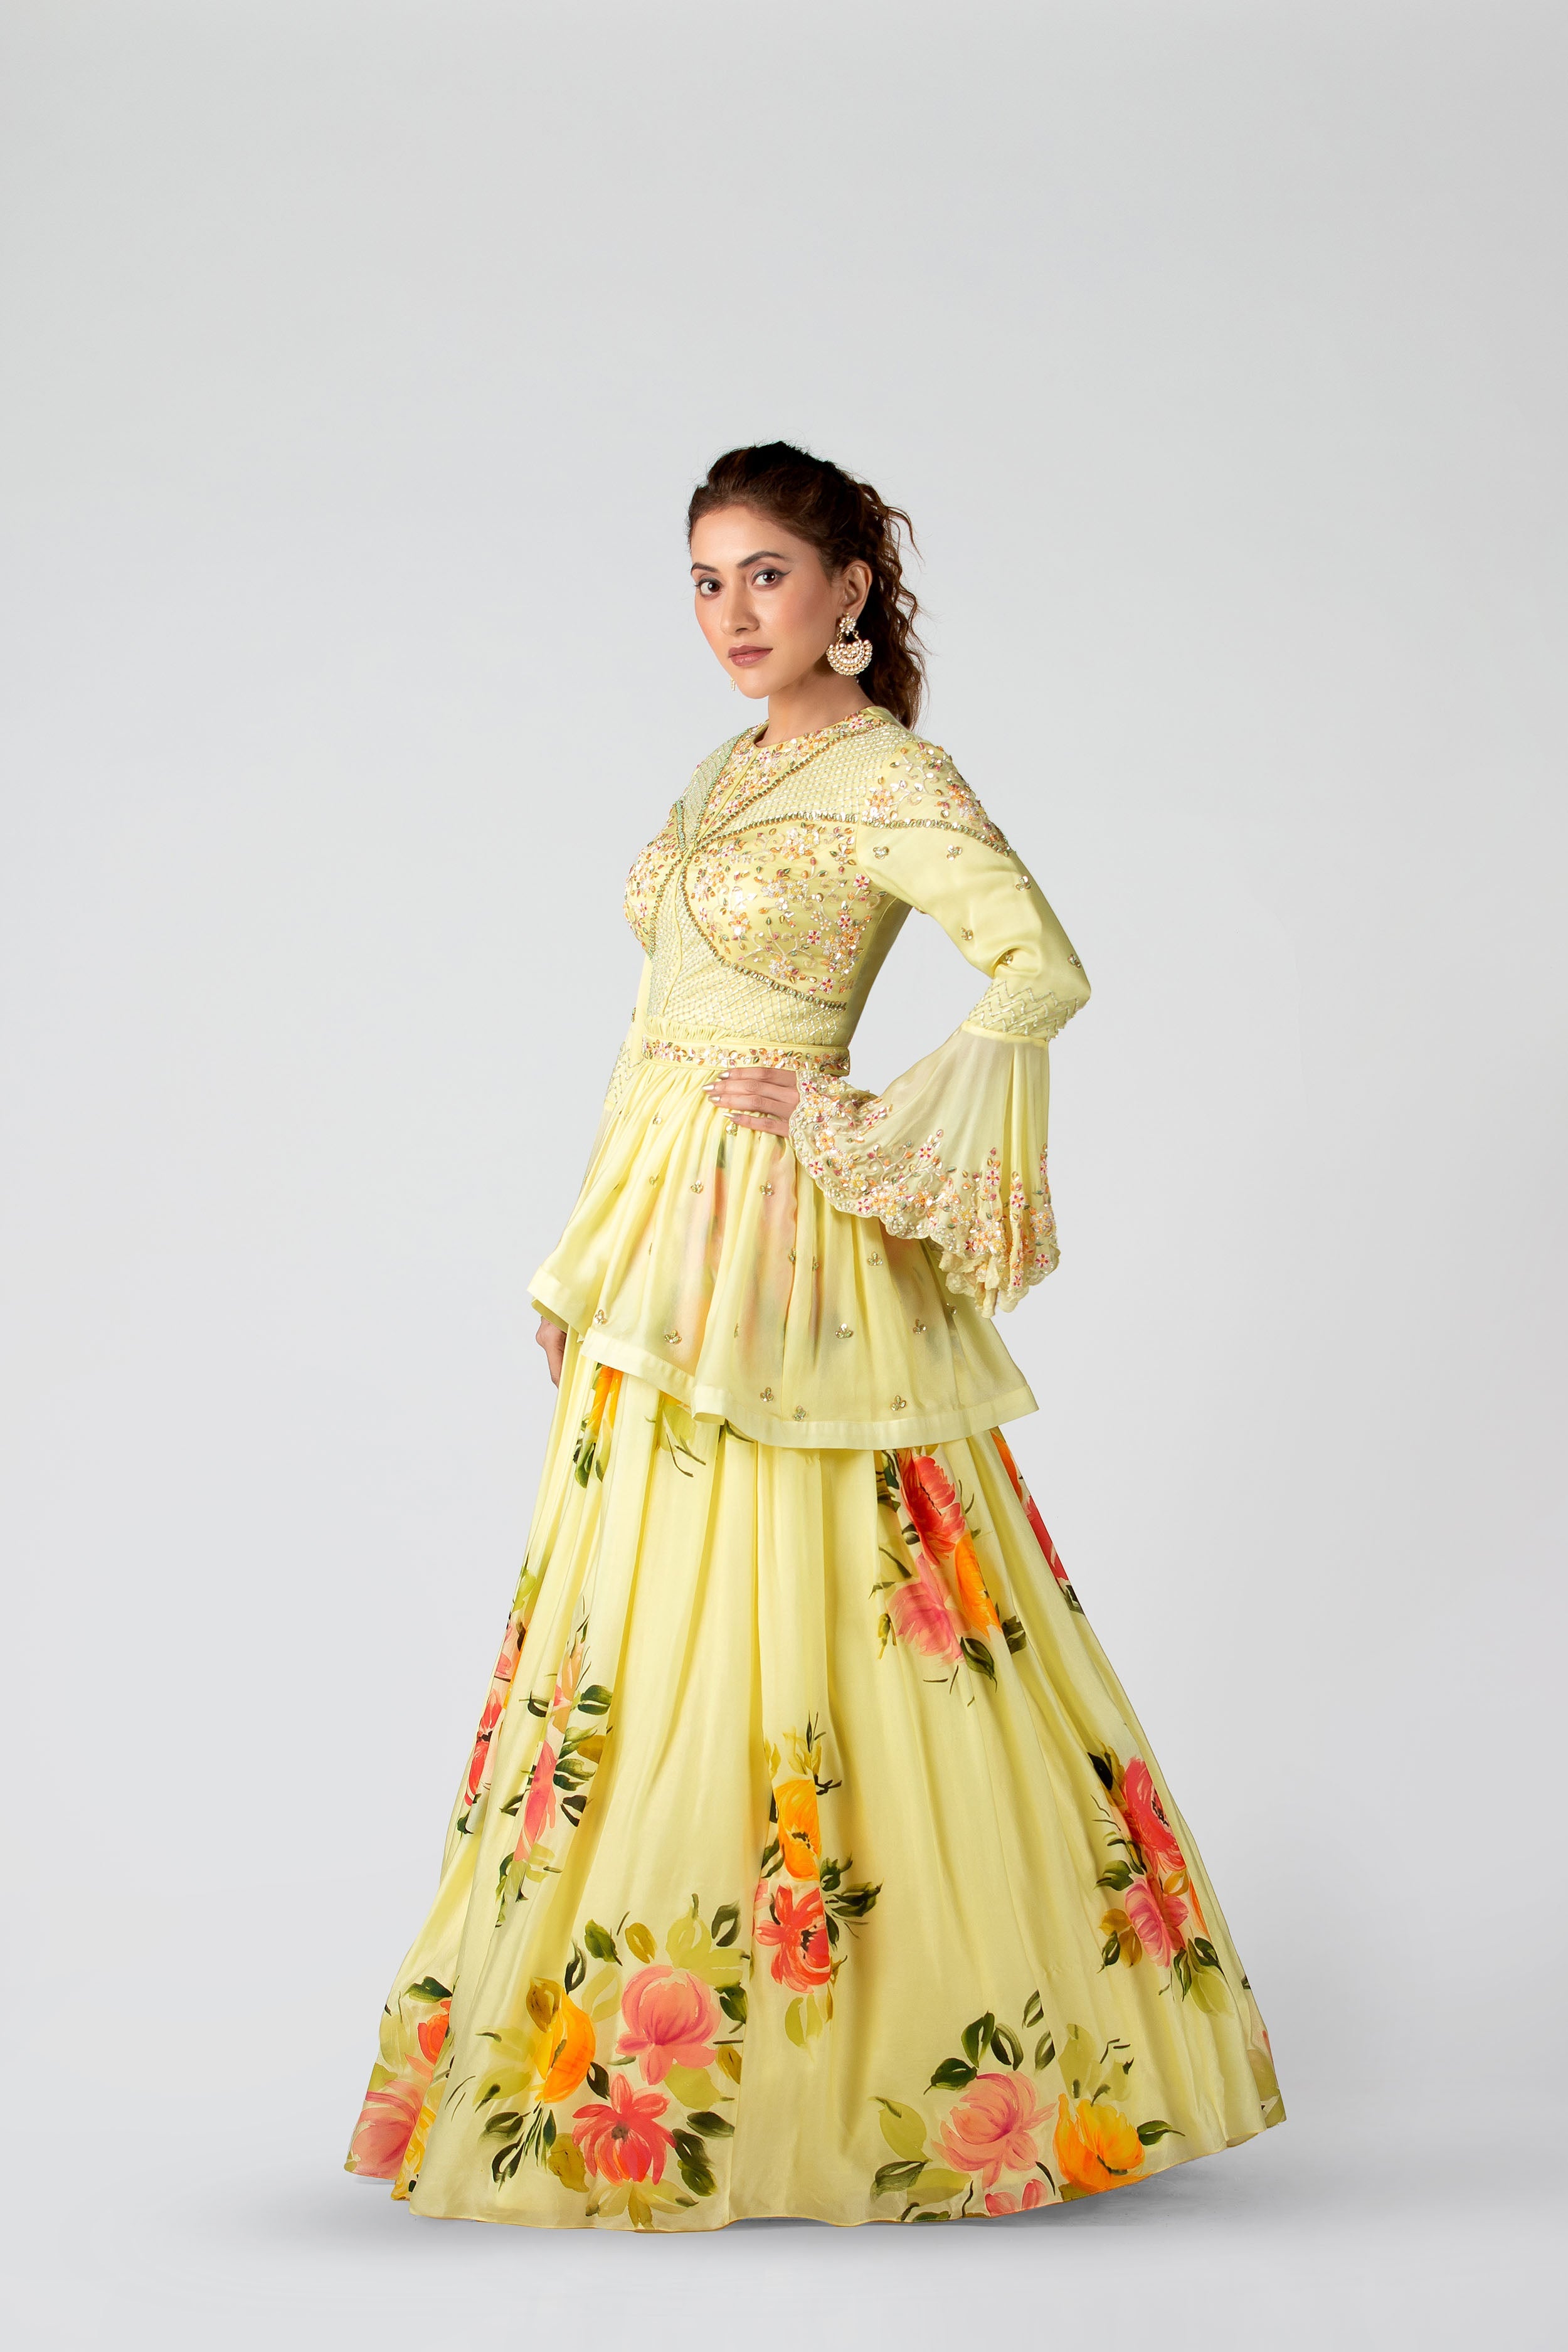 Suruchi Parakh - Pastel Yellow Hand-Painted Pleated Skirt Set